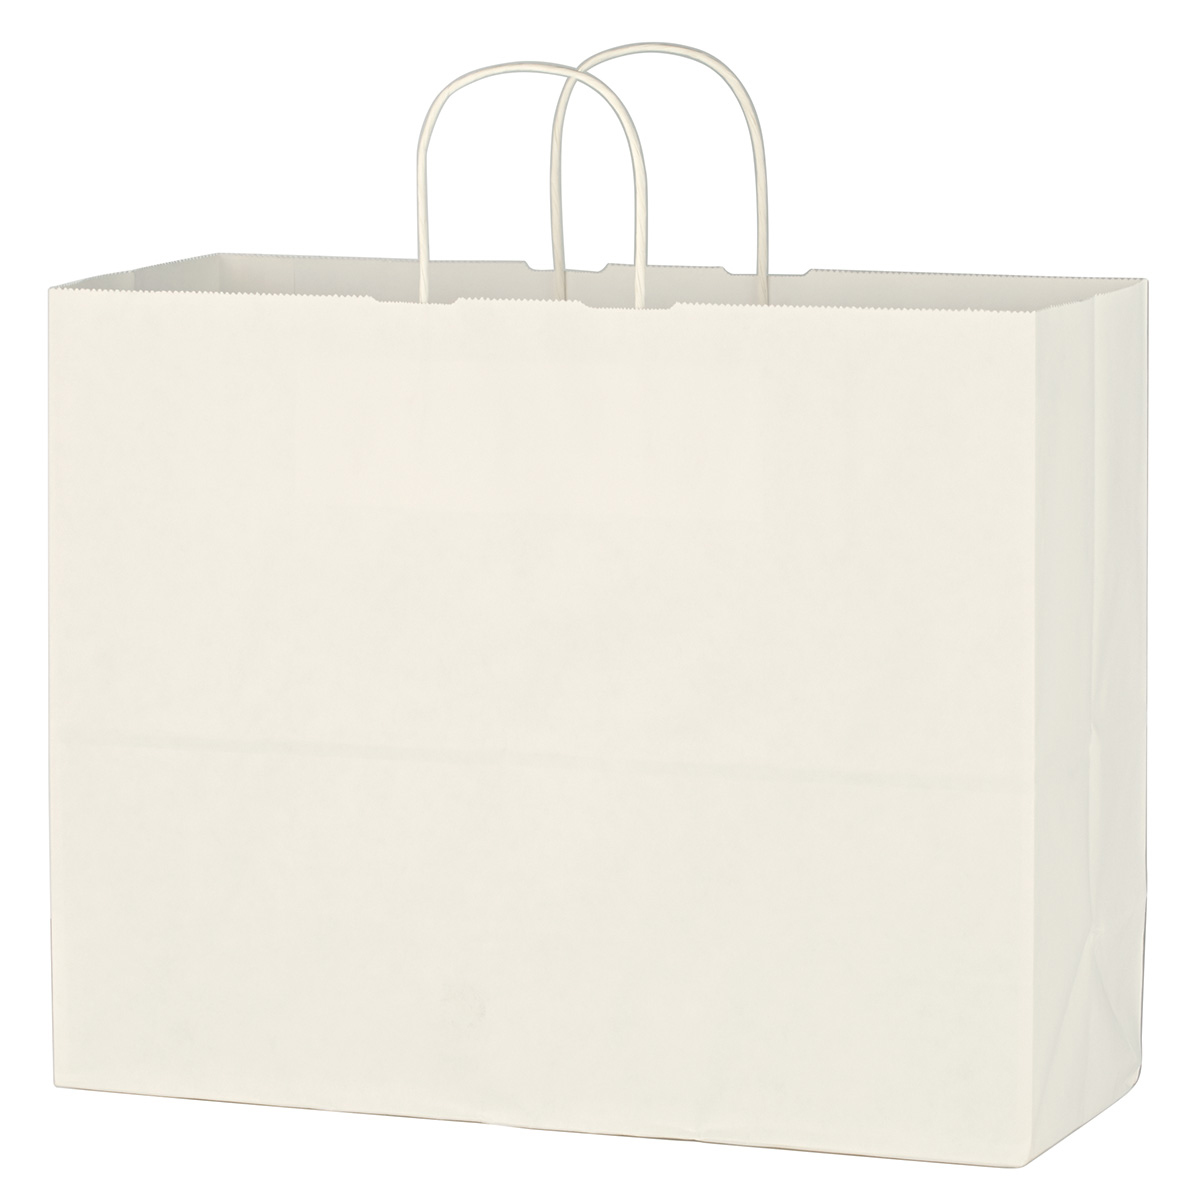 3913 - Bolsa de Papel Kraft Color Blanco para Compras 16" x 12-1/2"